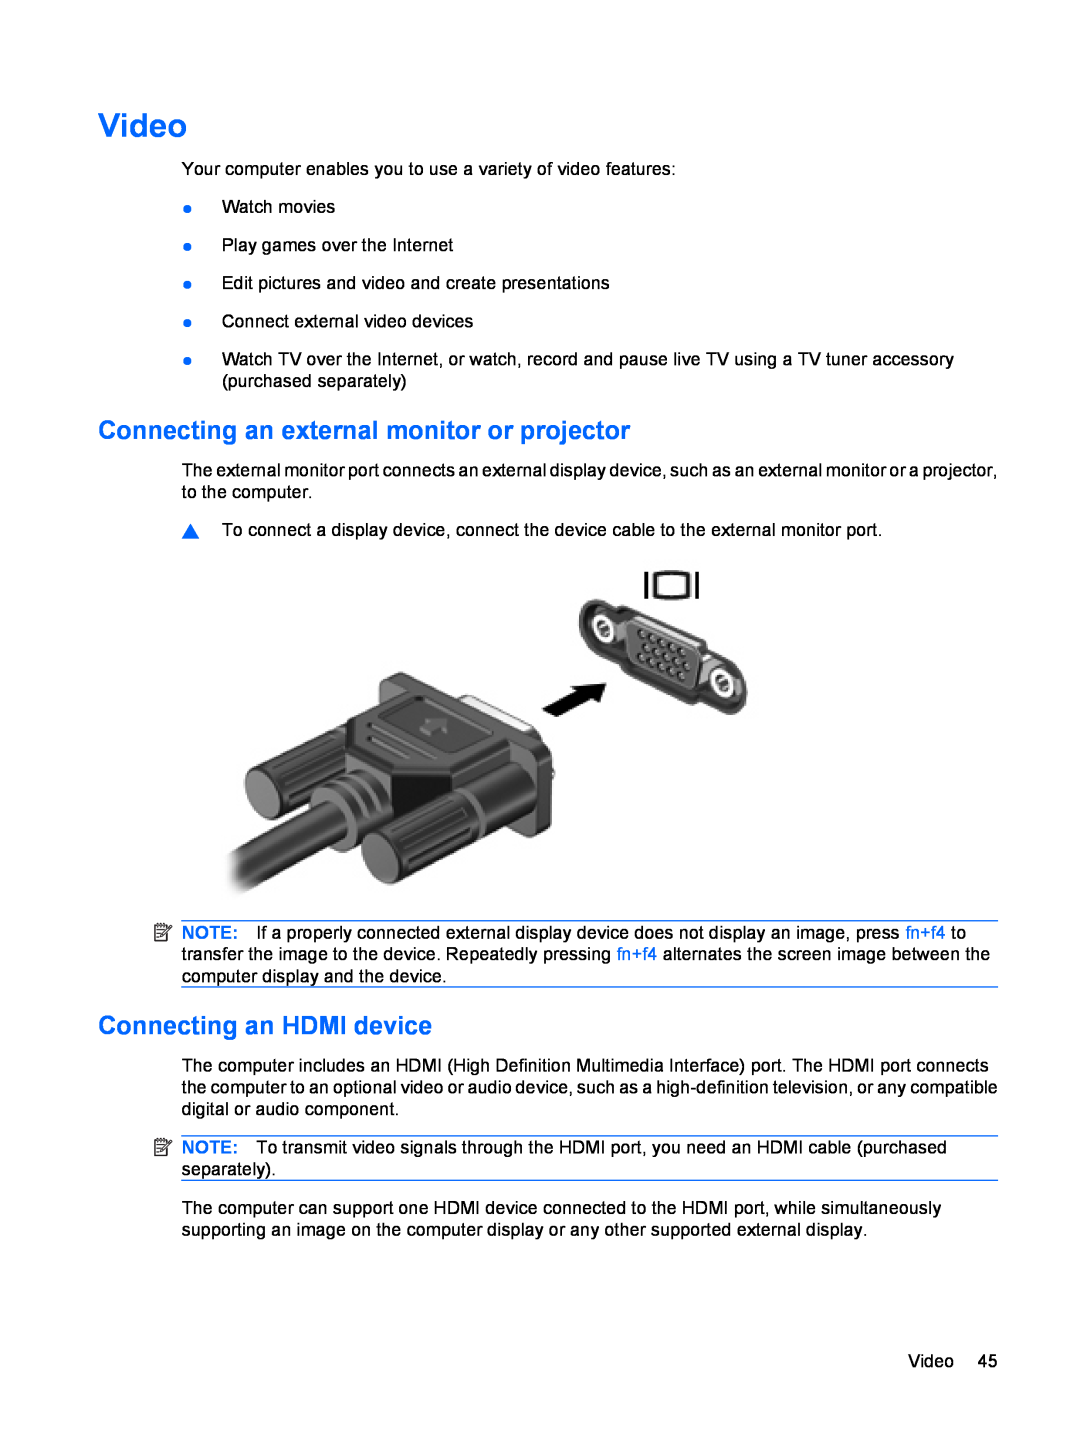 HP CQ35-406TU, CQ35-304TU, CQ36-108TX manual Video, Connecting an external monitor or projector, Connecting an HDMI device 